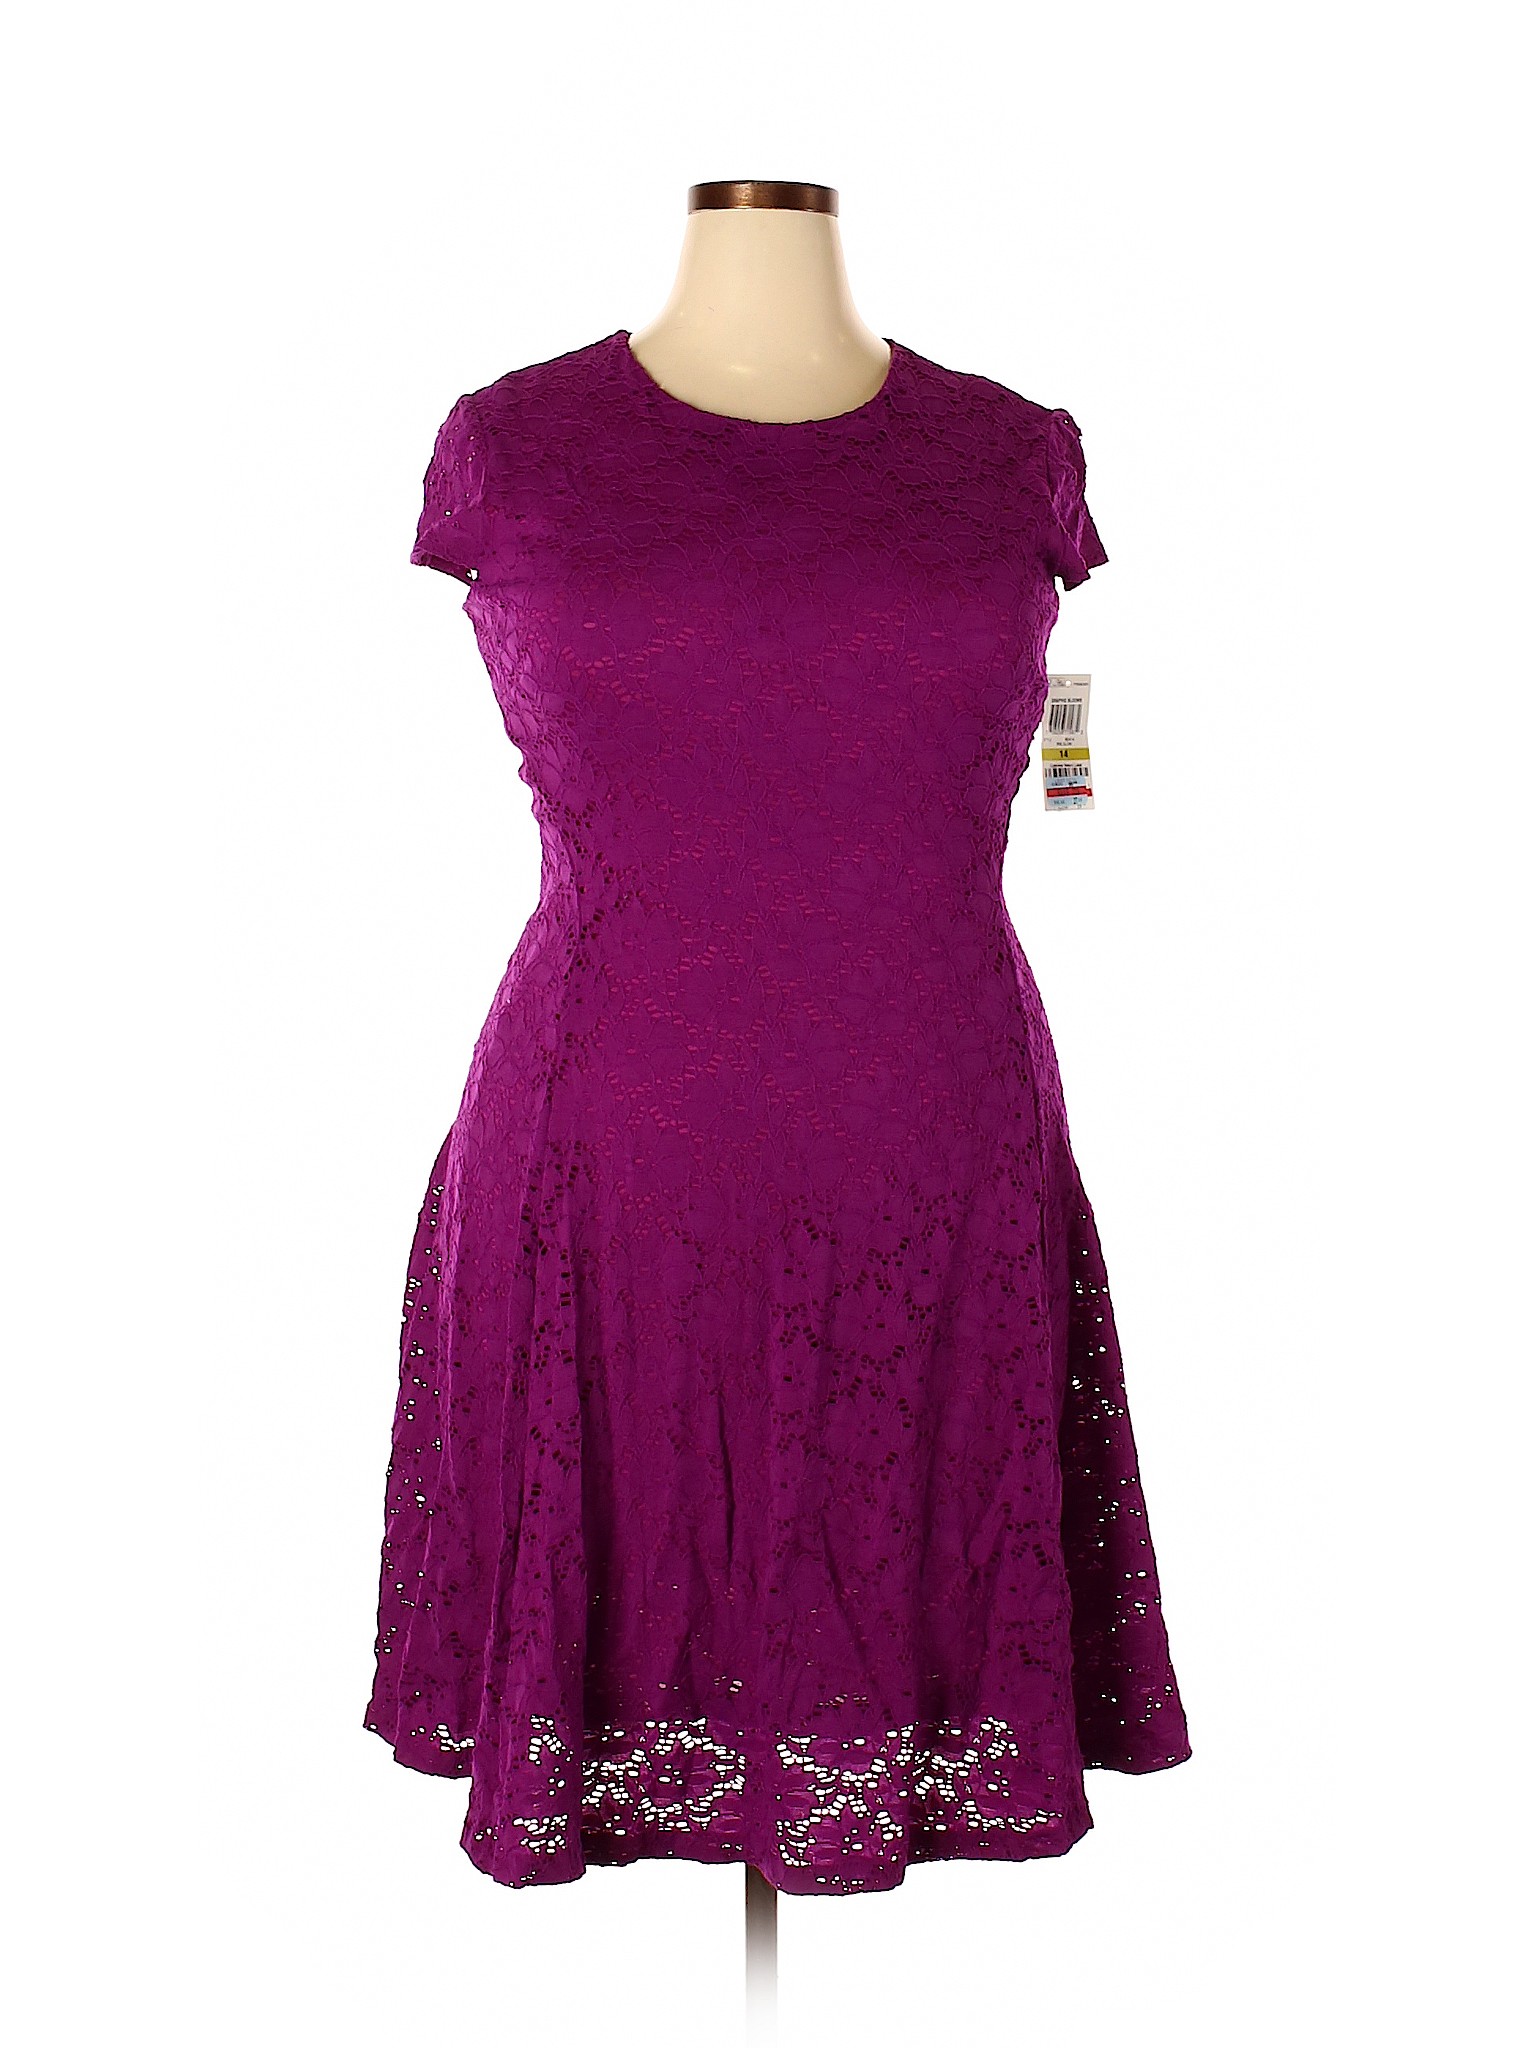 Alfani Solid Purple Casual Dress Size 14 - 63% off | thredUP